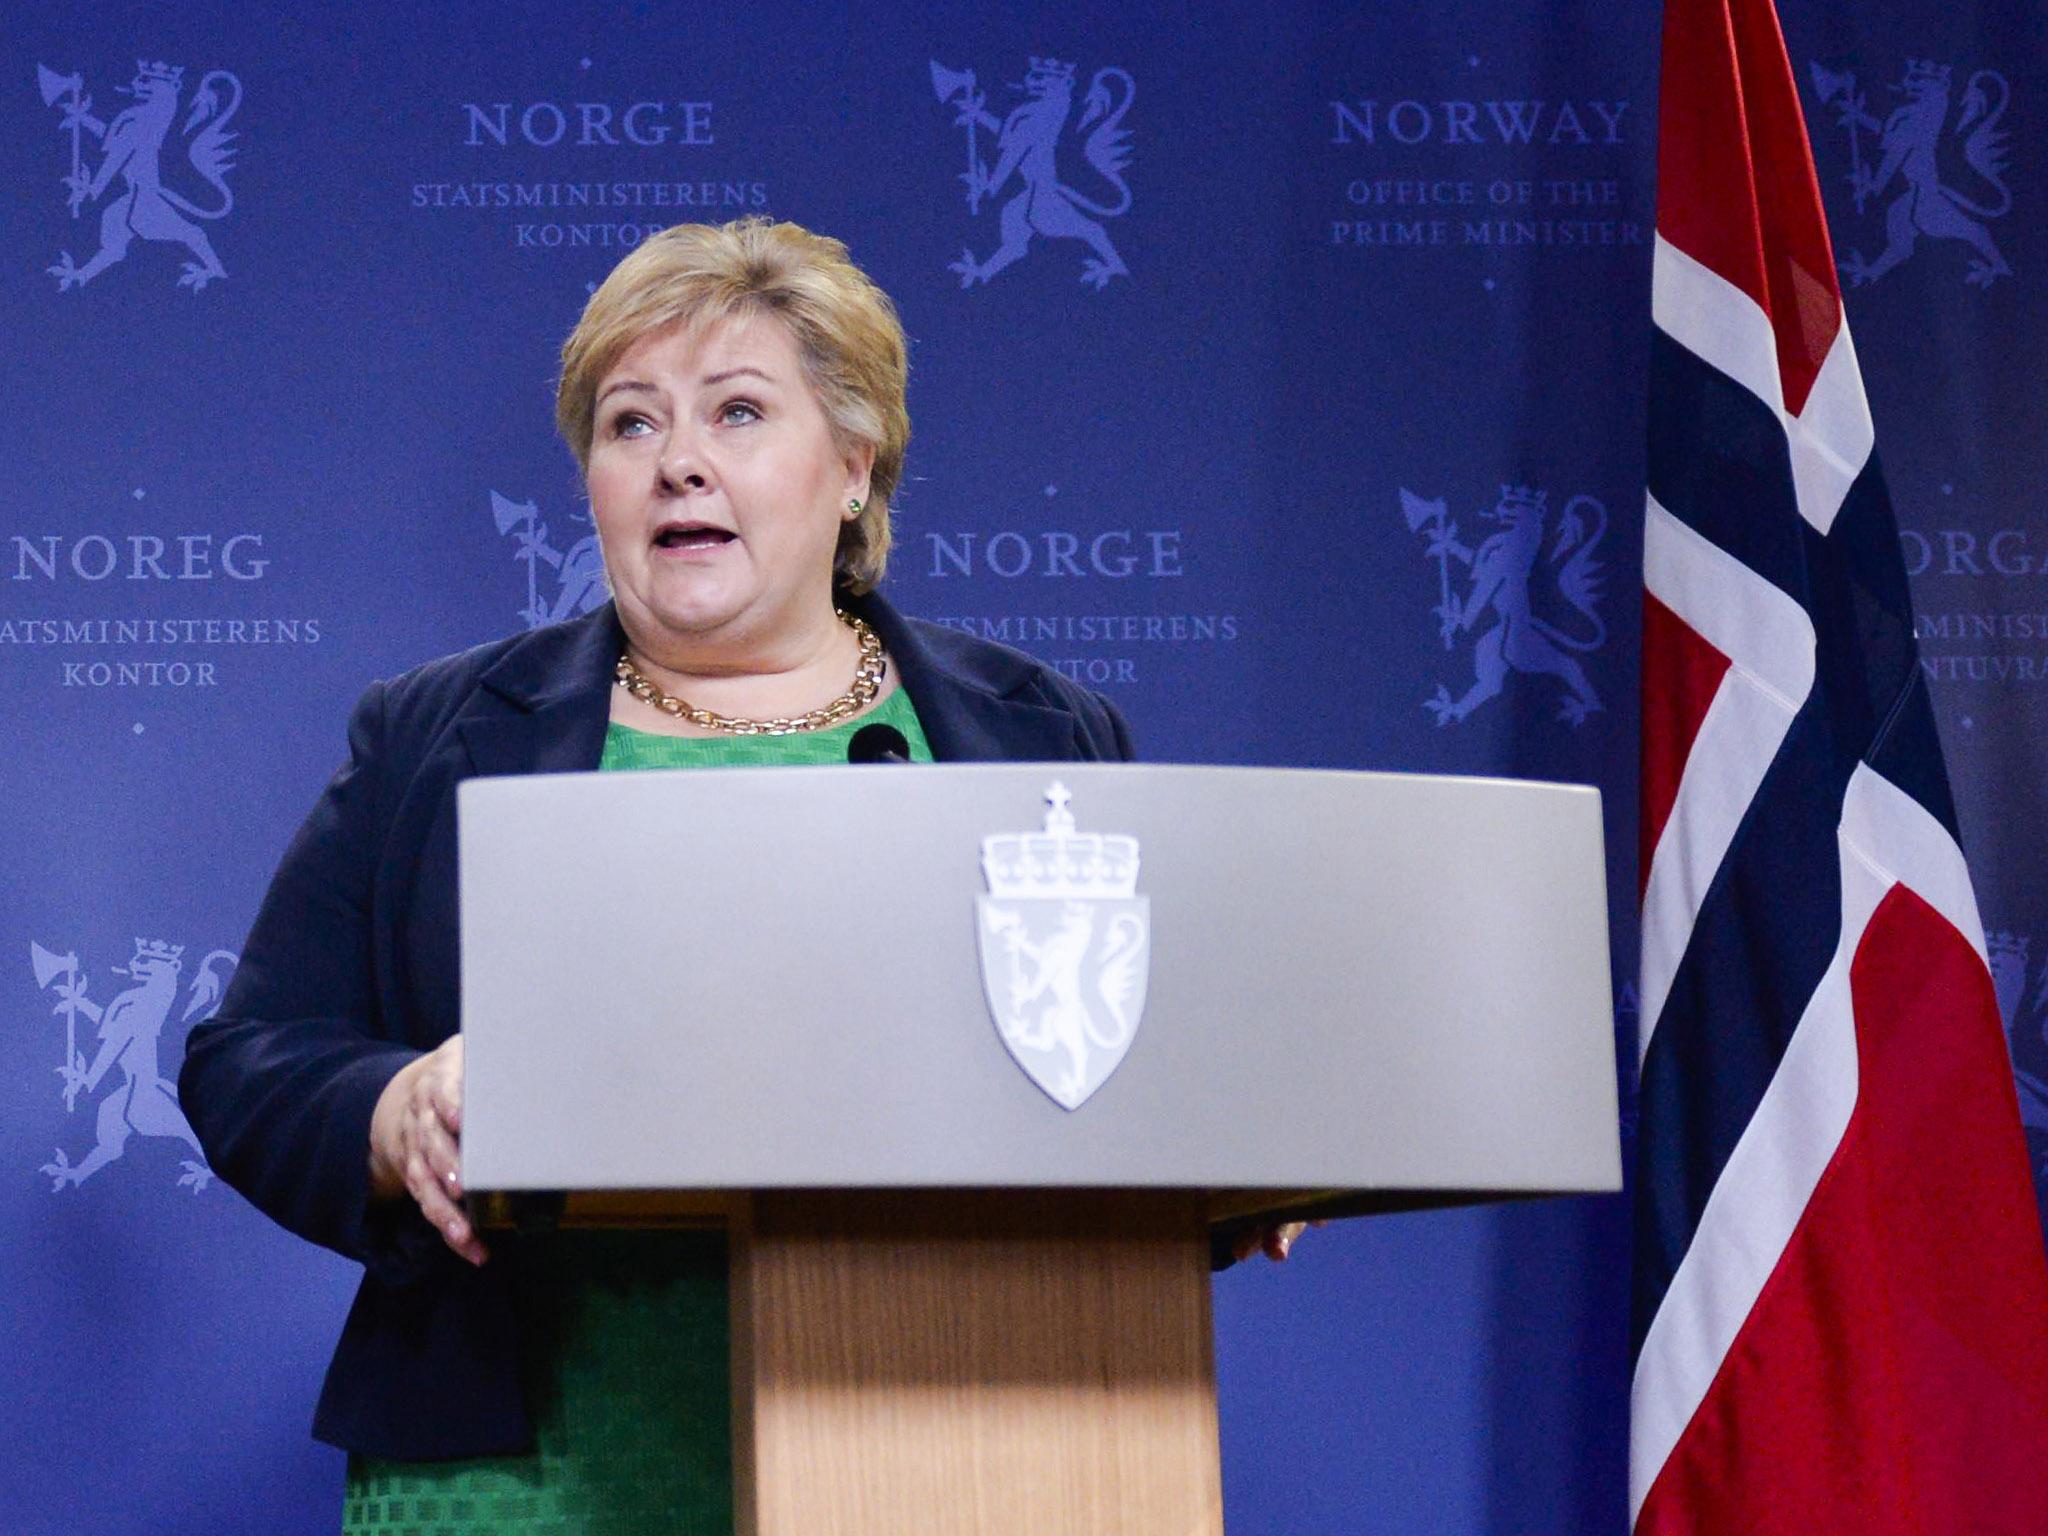 Norway's Prime Minister Erna Solberg